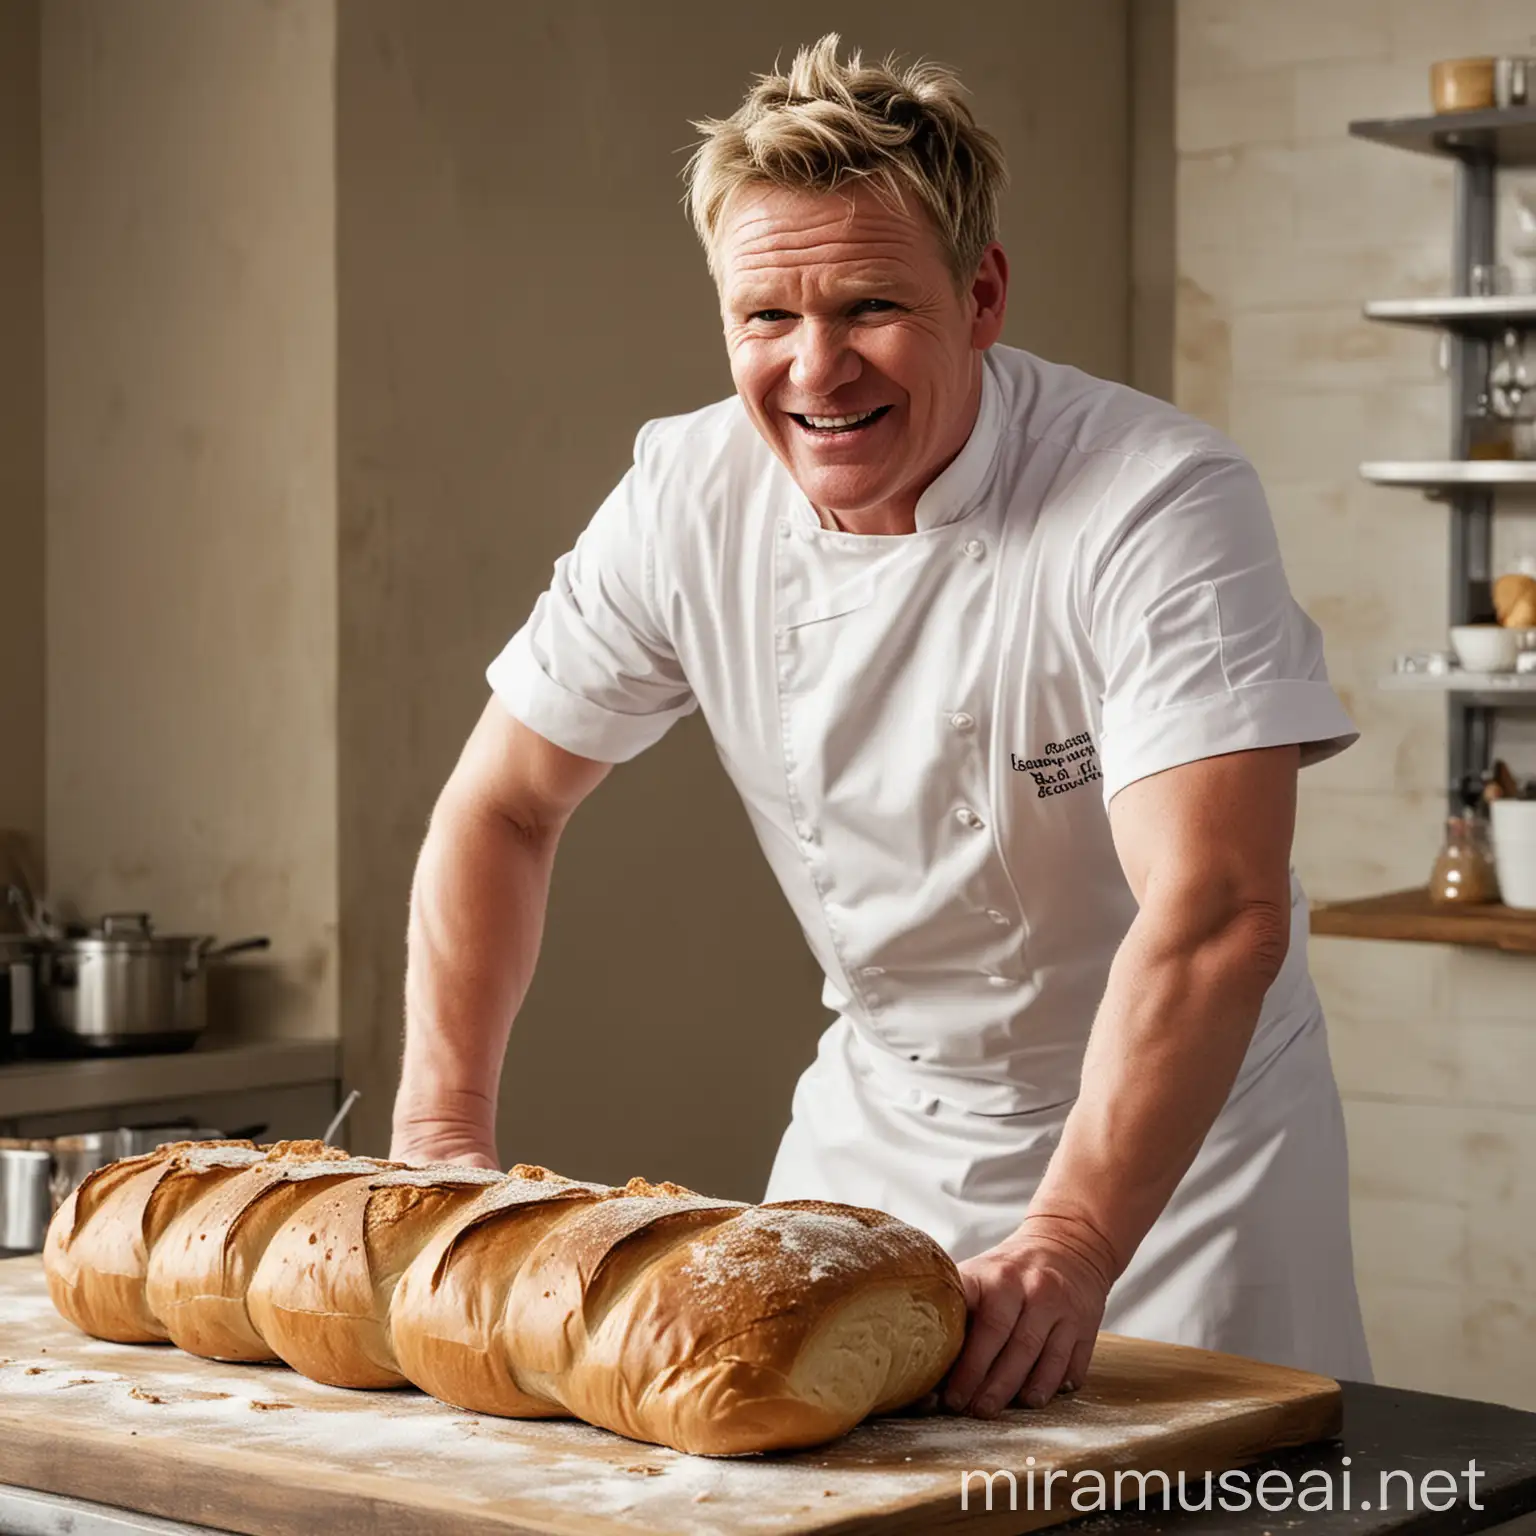 Celebrity Chef Gordon Ramsay Bakes Bread with Joy